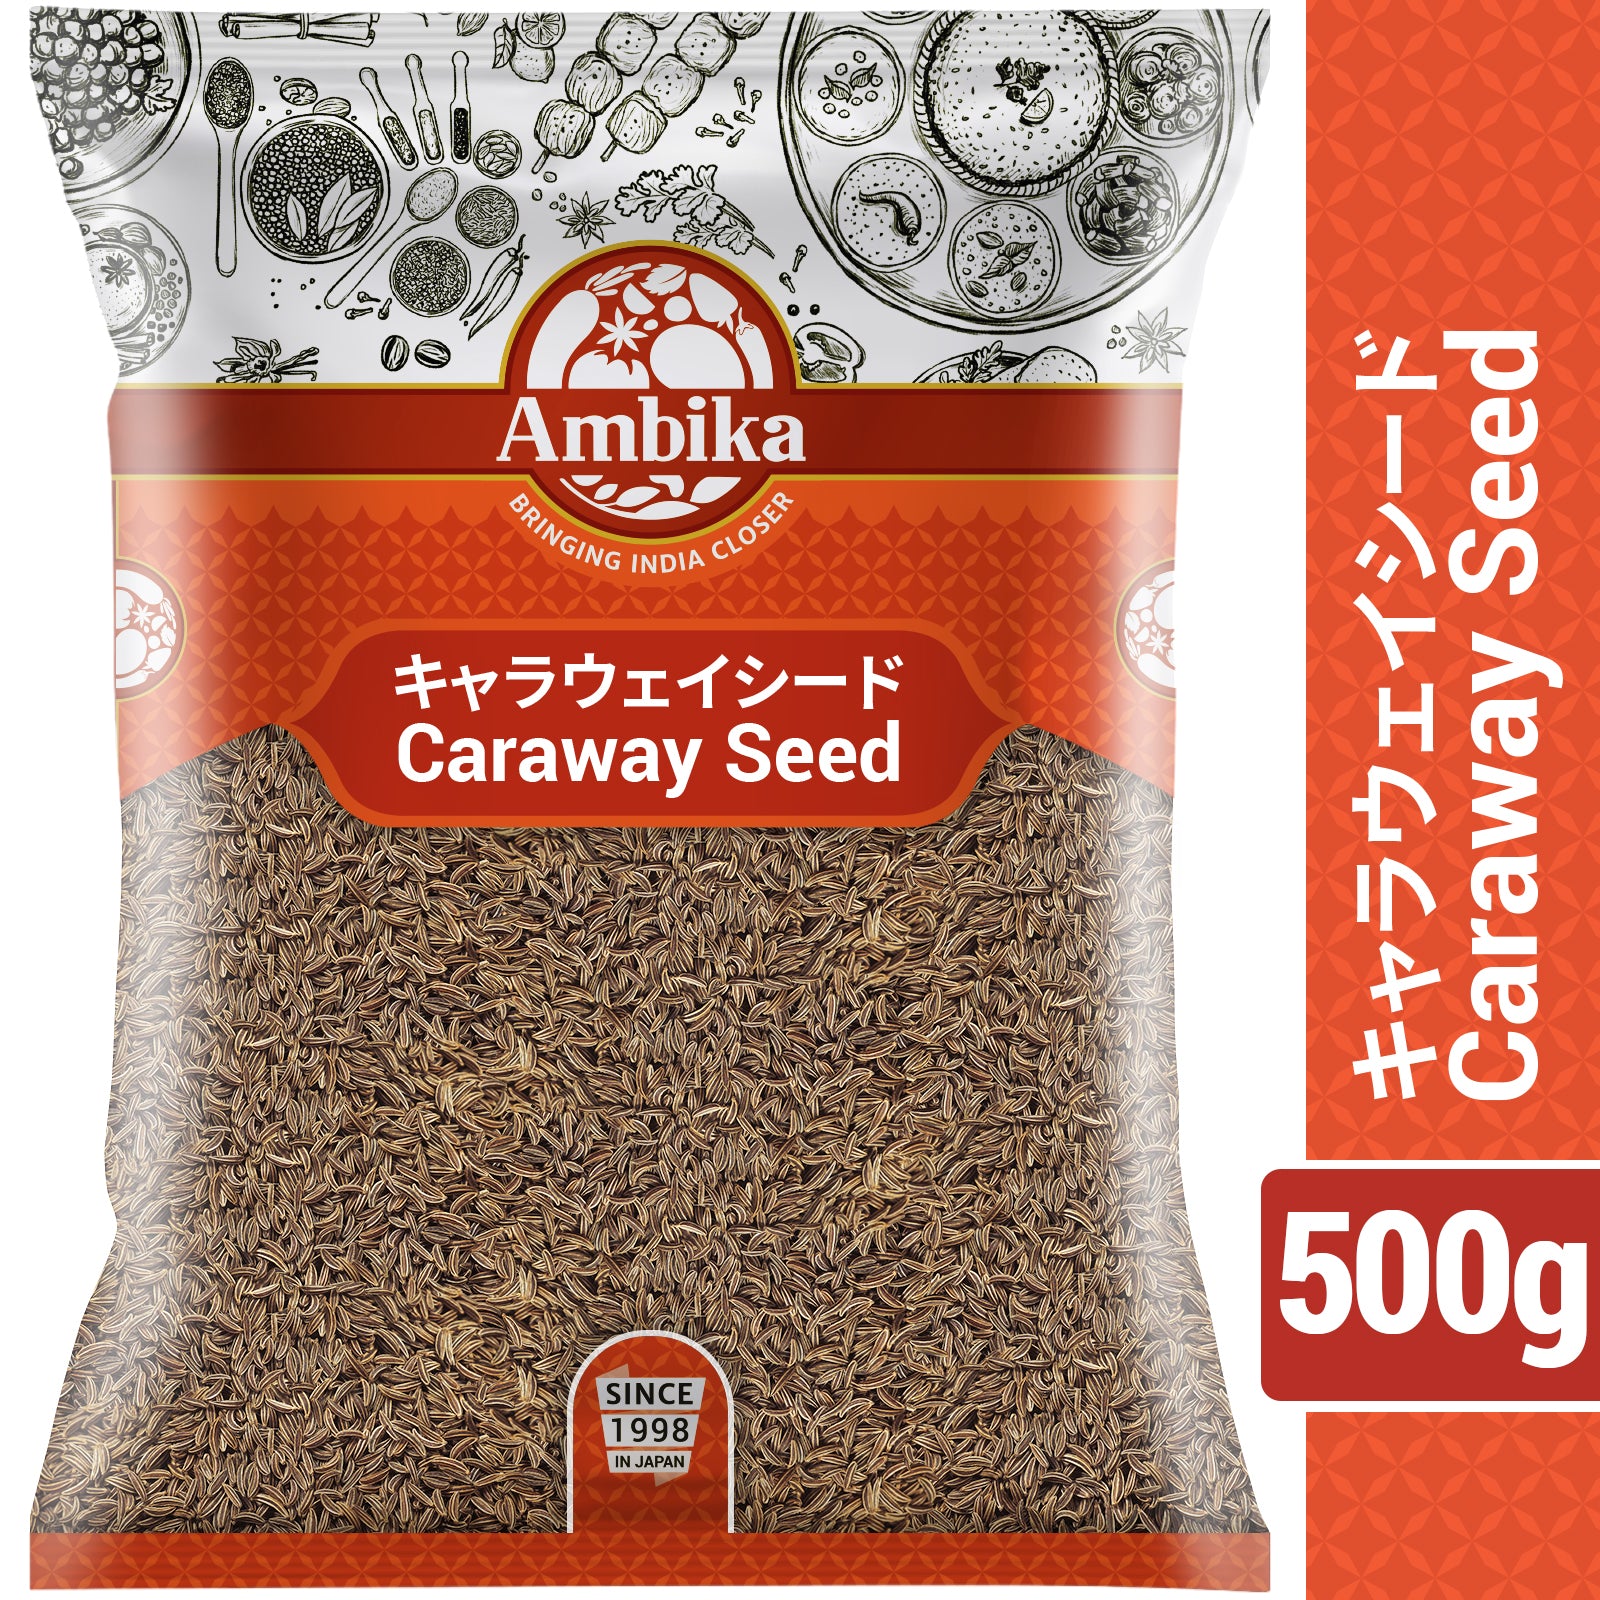 Ambika Caraway Seed 500g